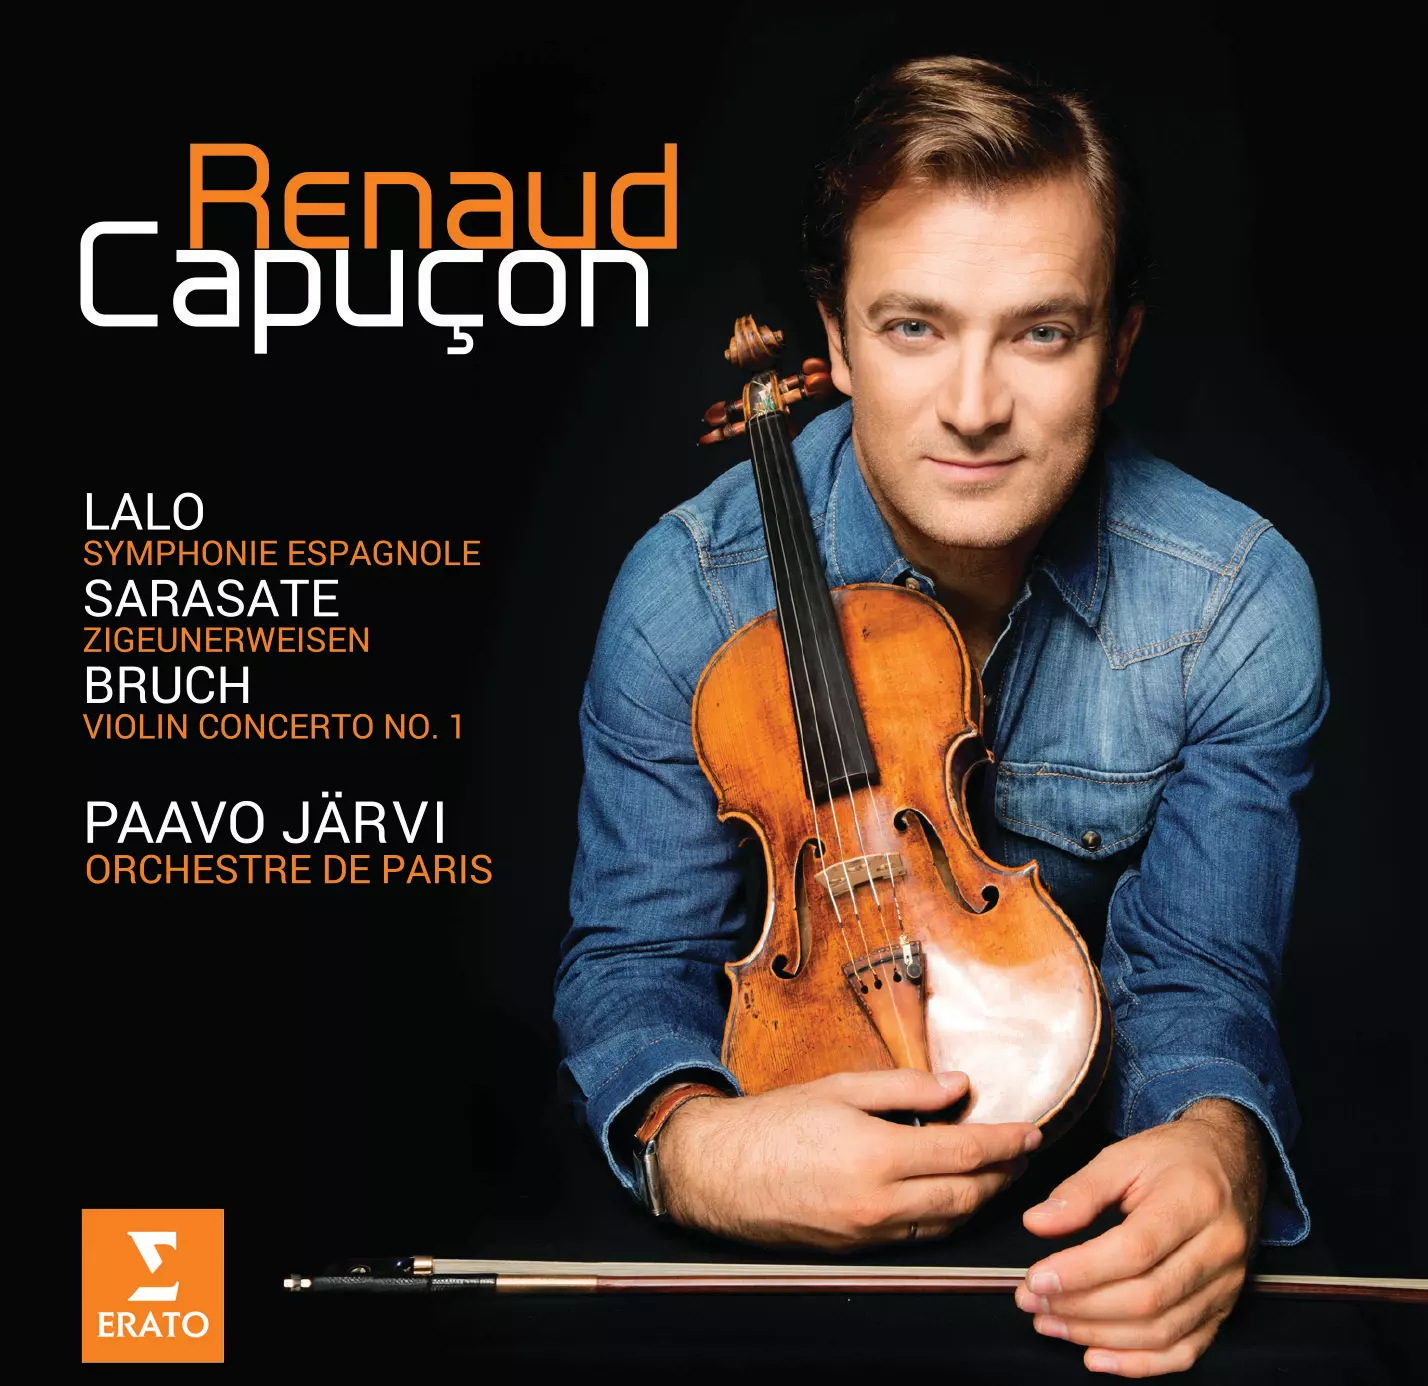 Renaud Capucon Lalo